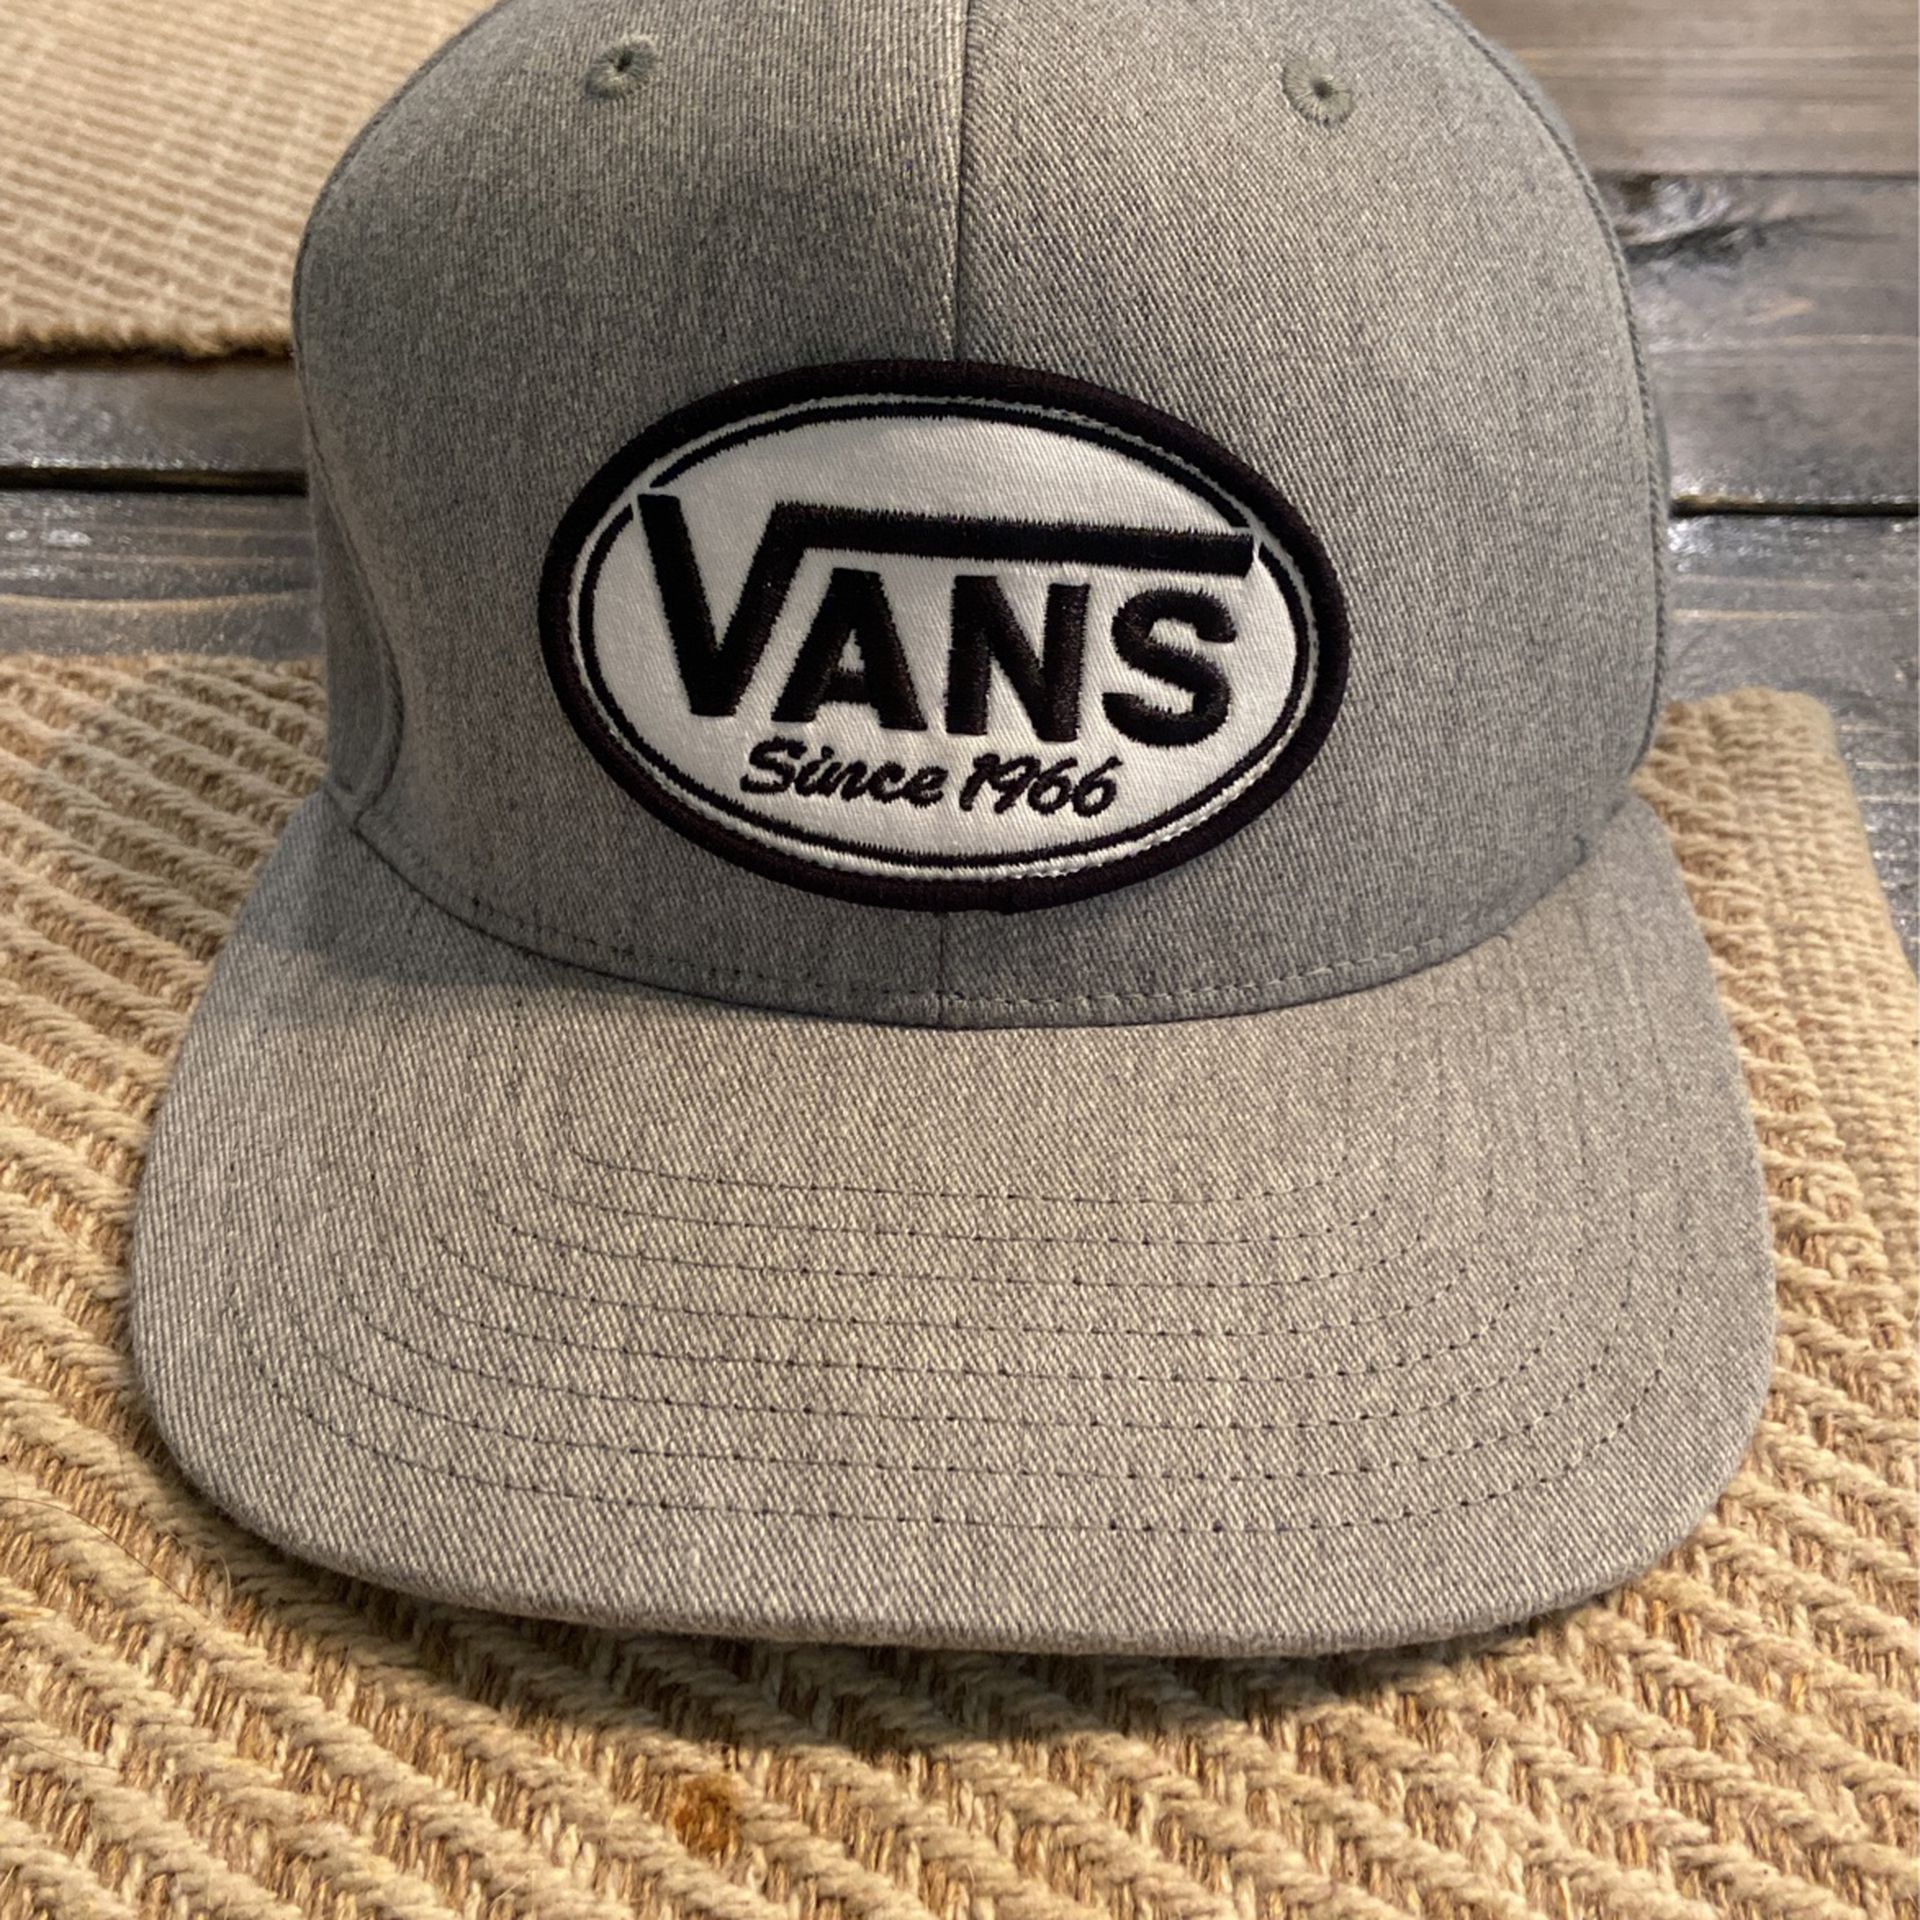 Vans SnapBack hat 